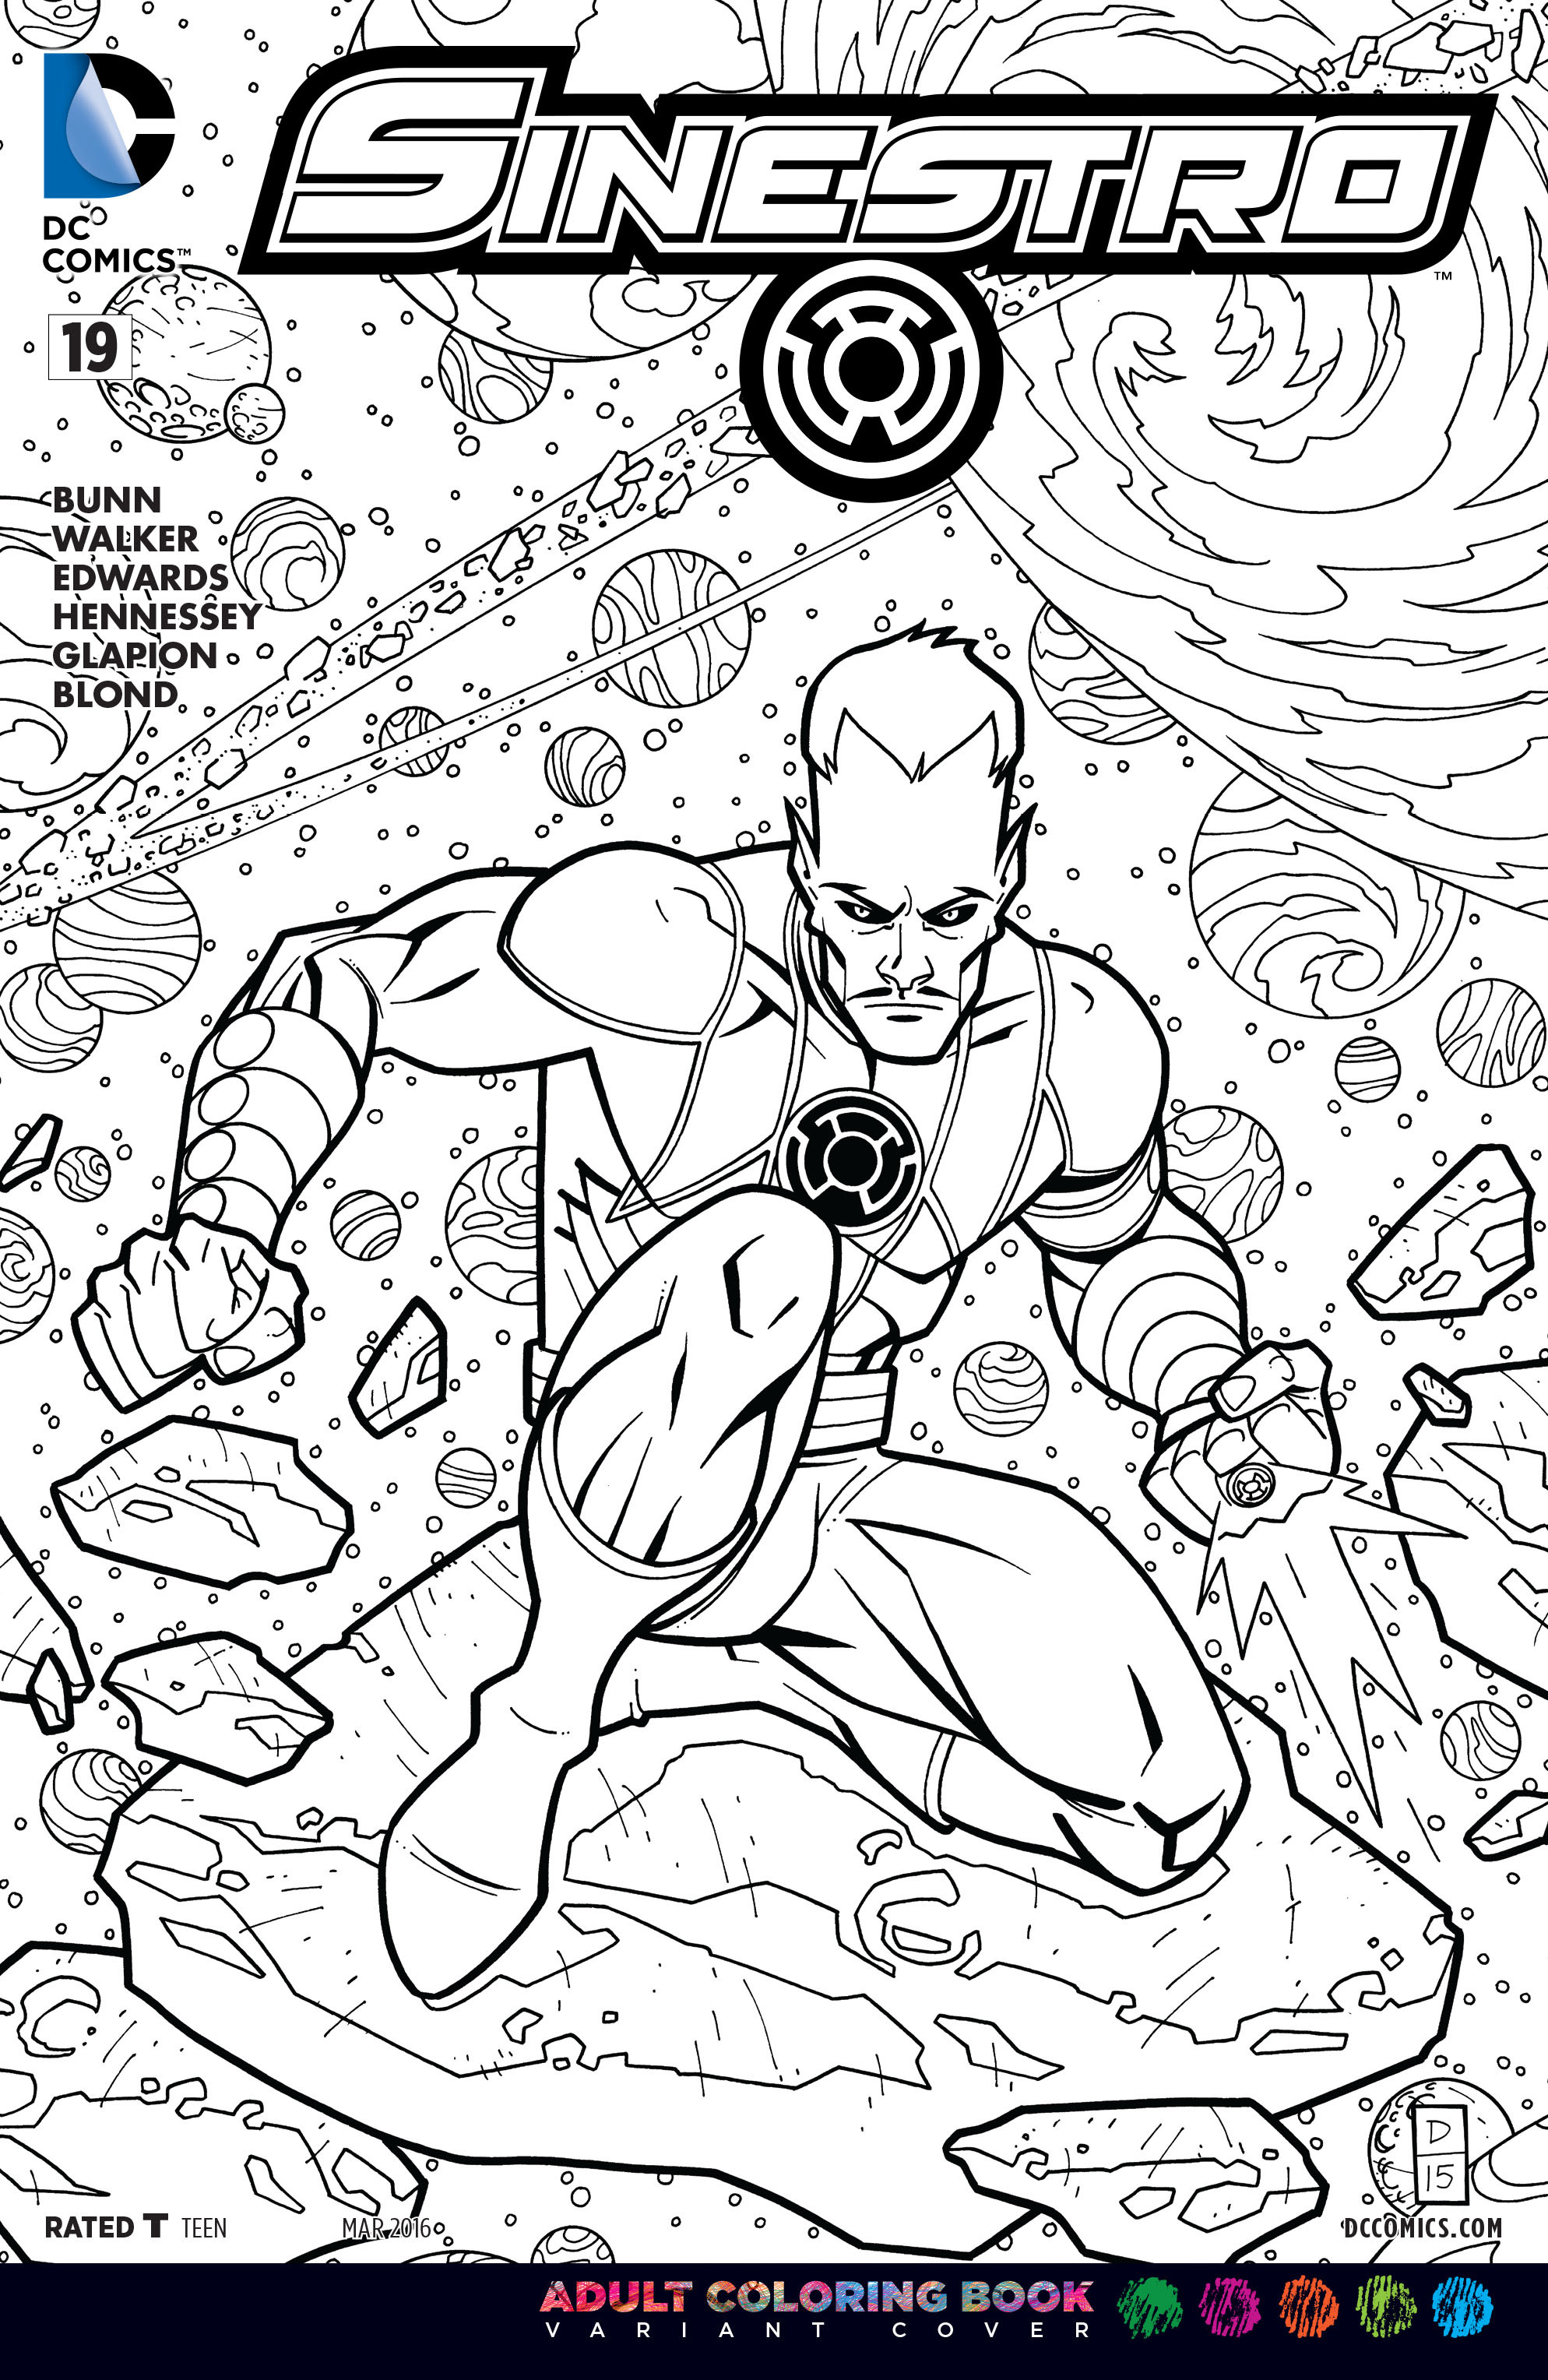 Read online Sinestro comic -  Issue #19 - 3